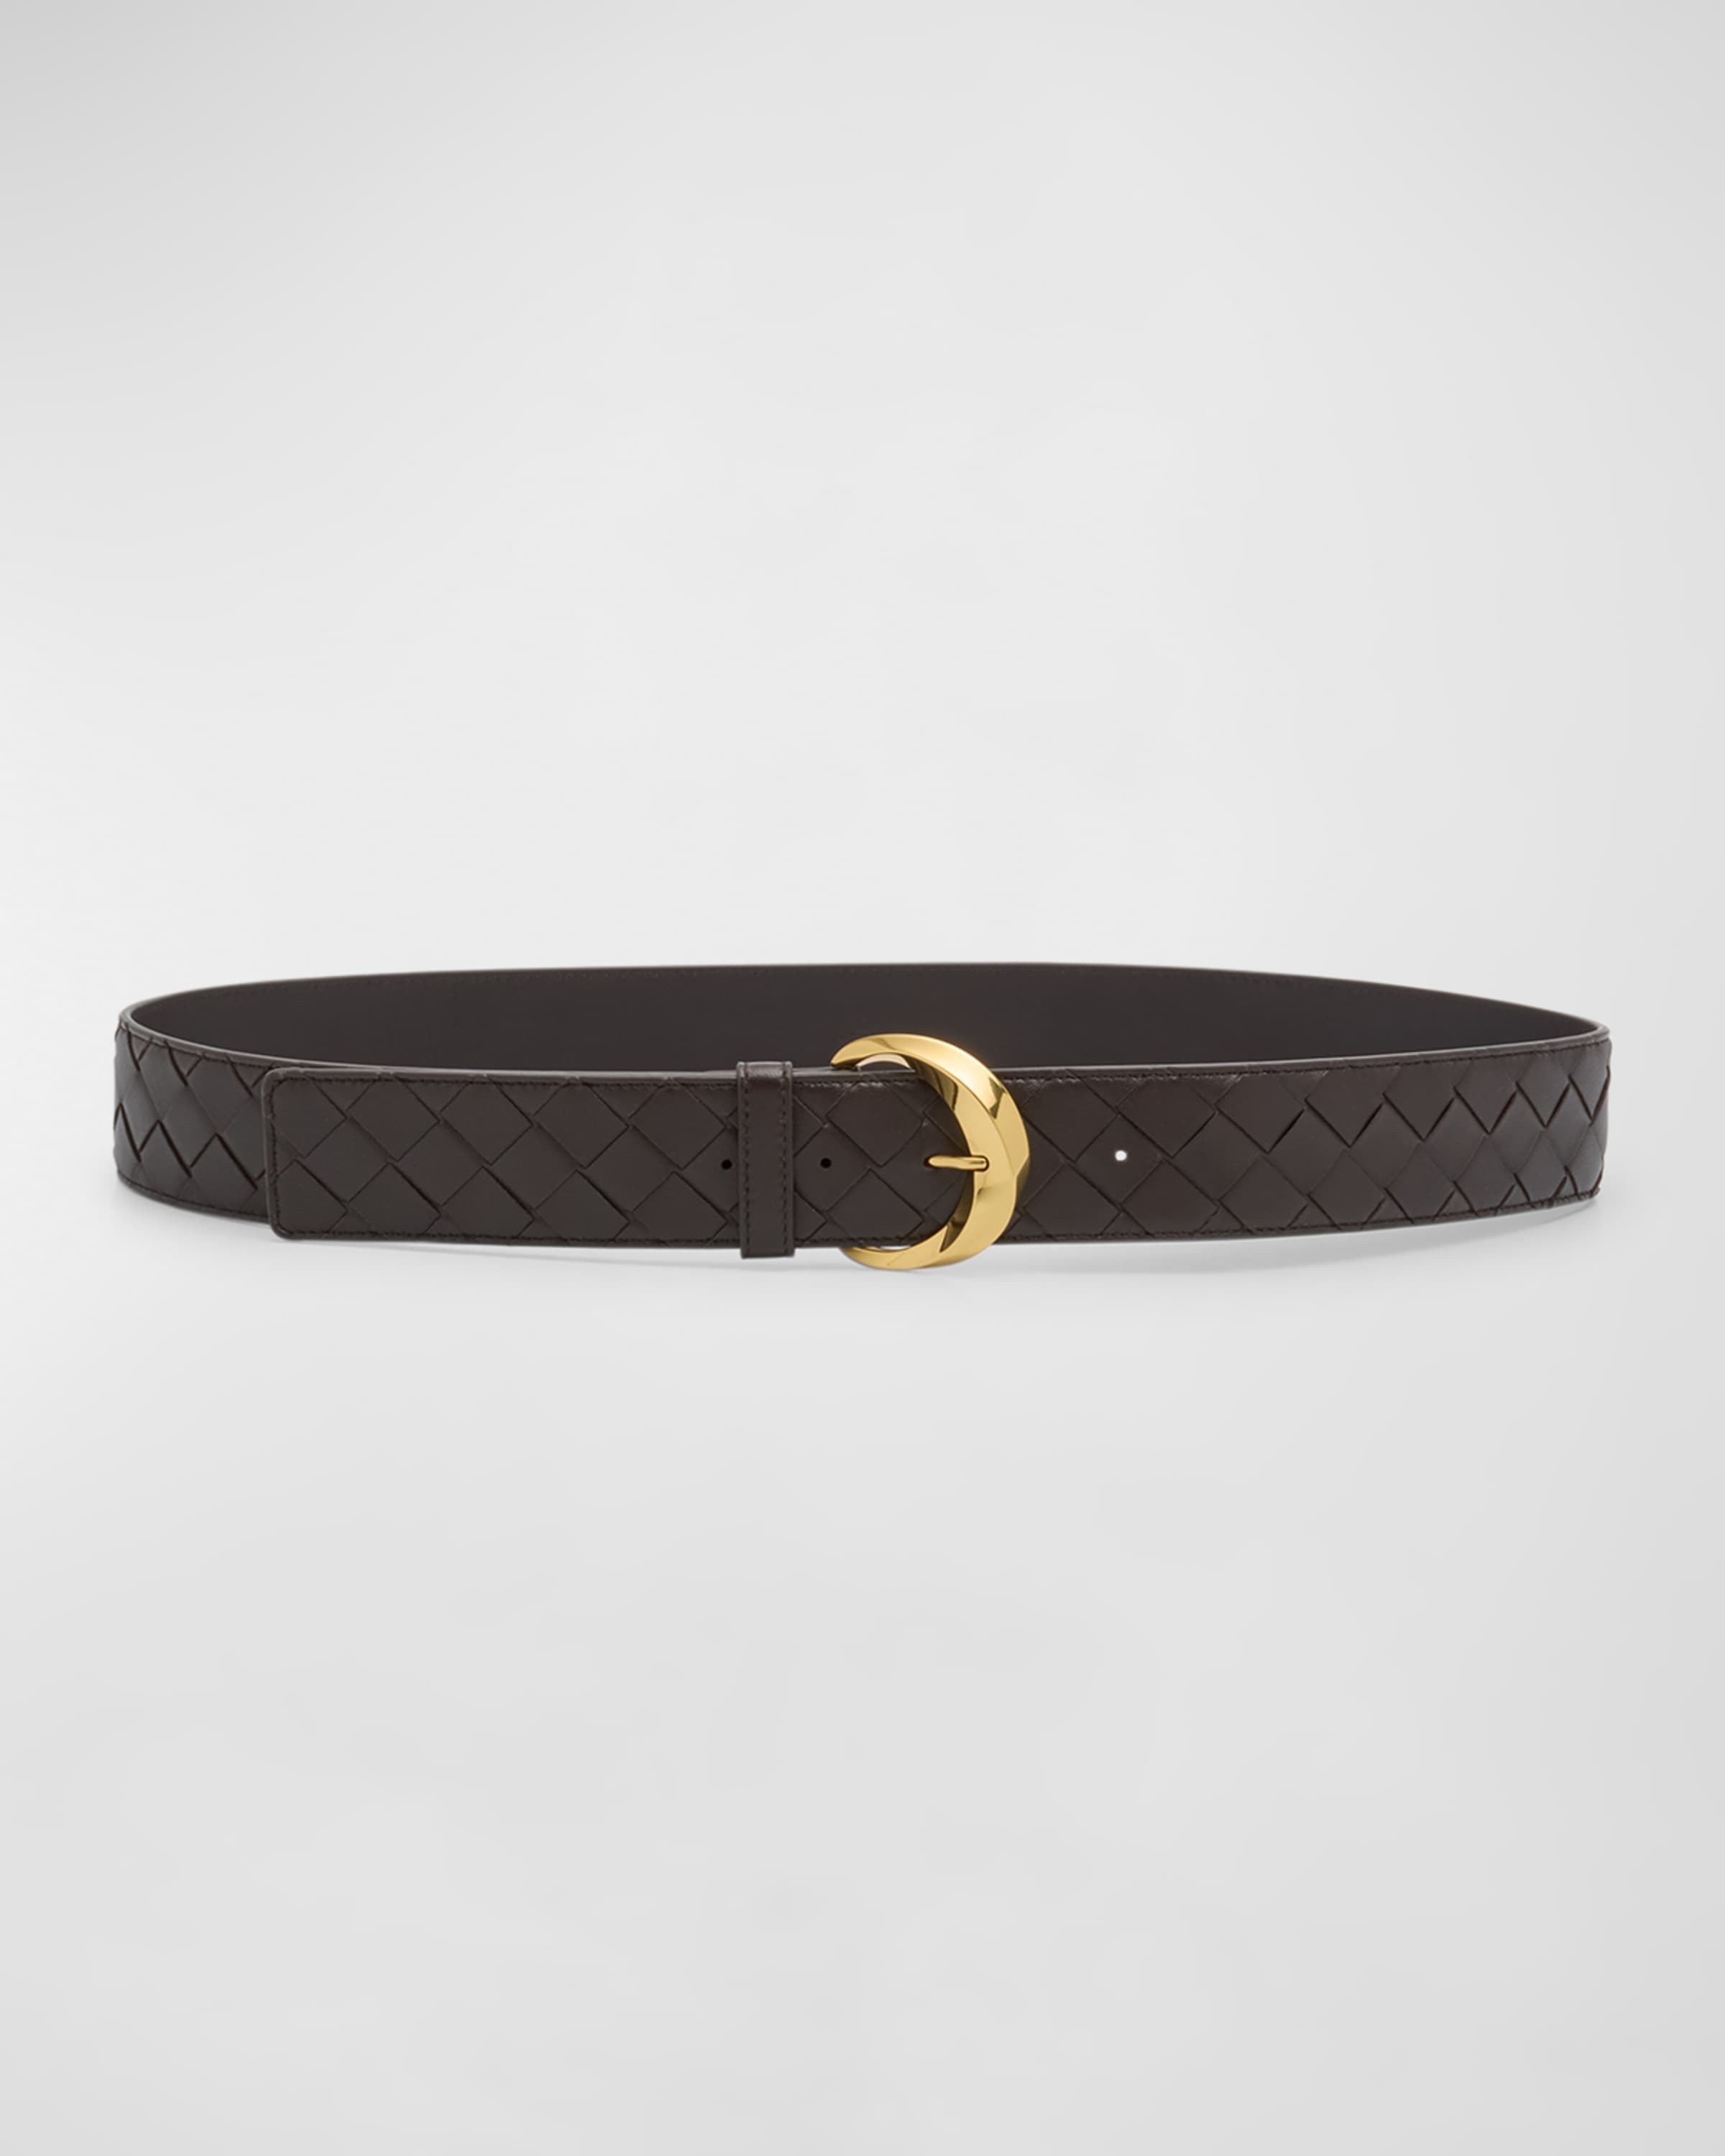 Bevel Buckled Woven Leather Belt - 1